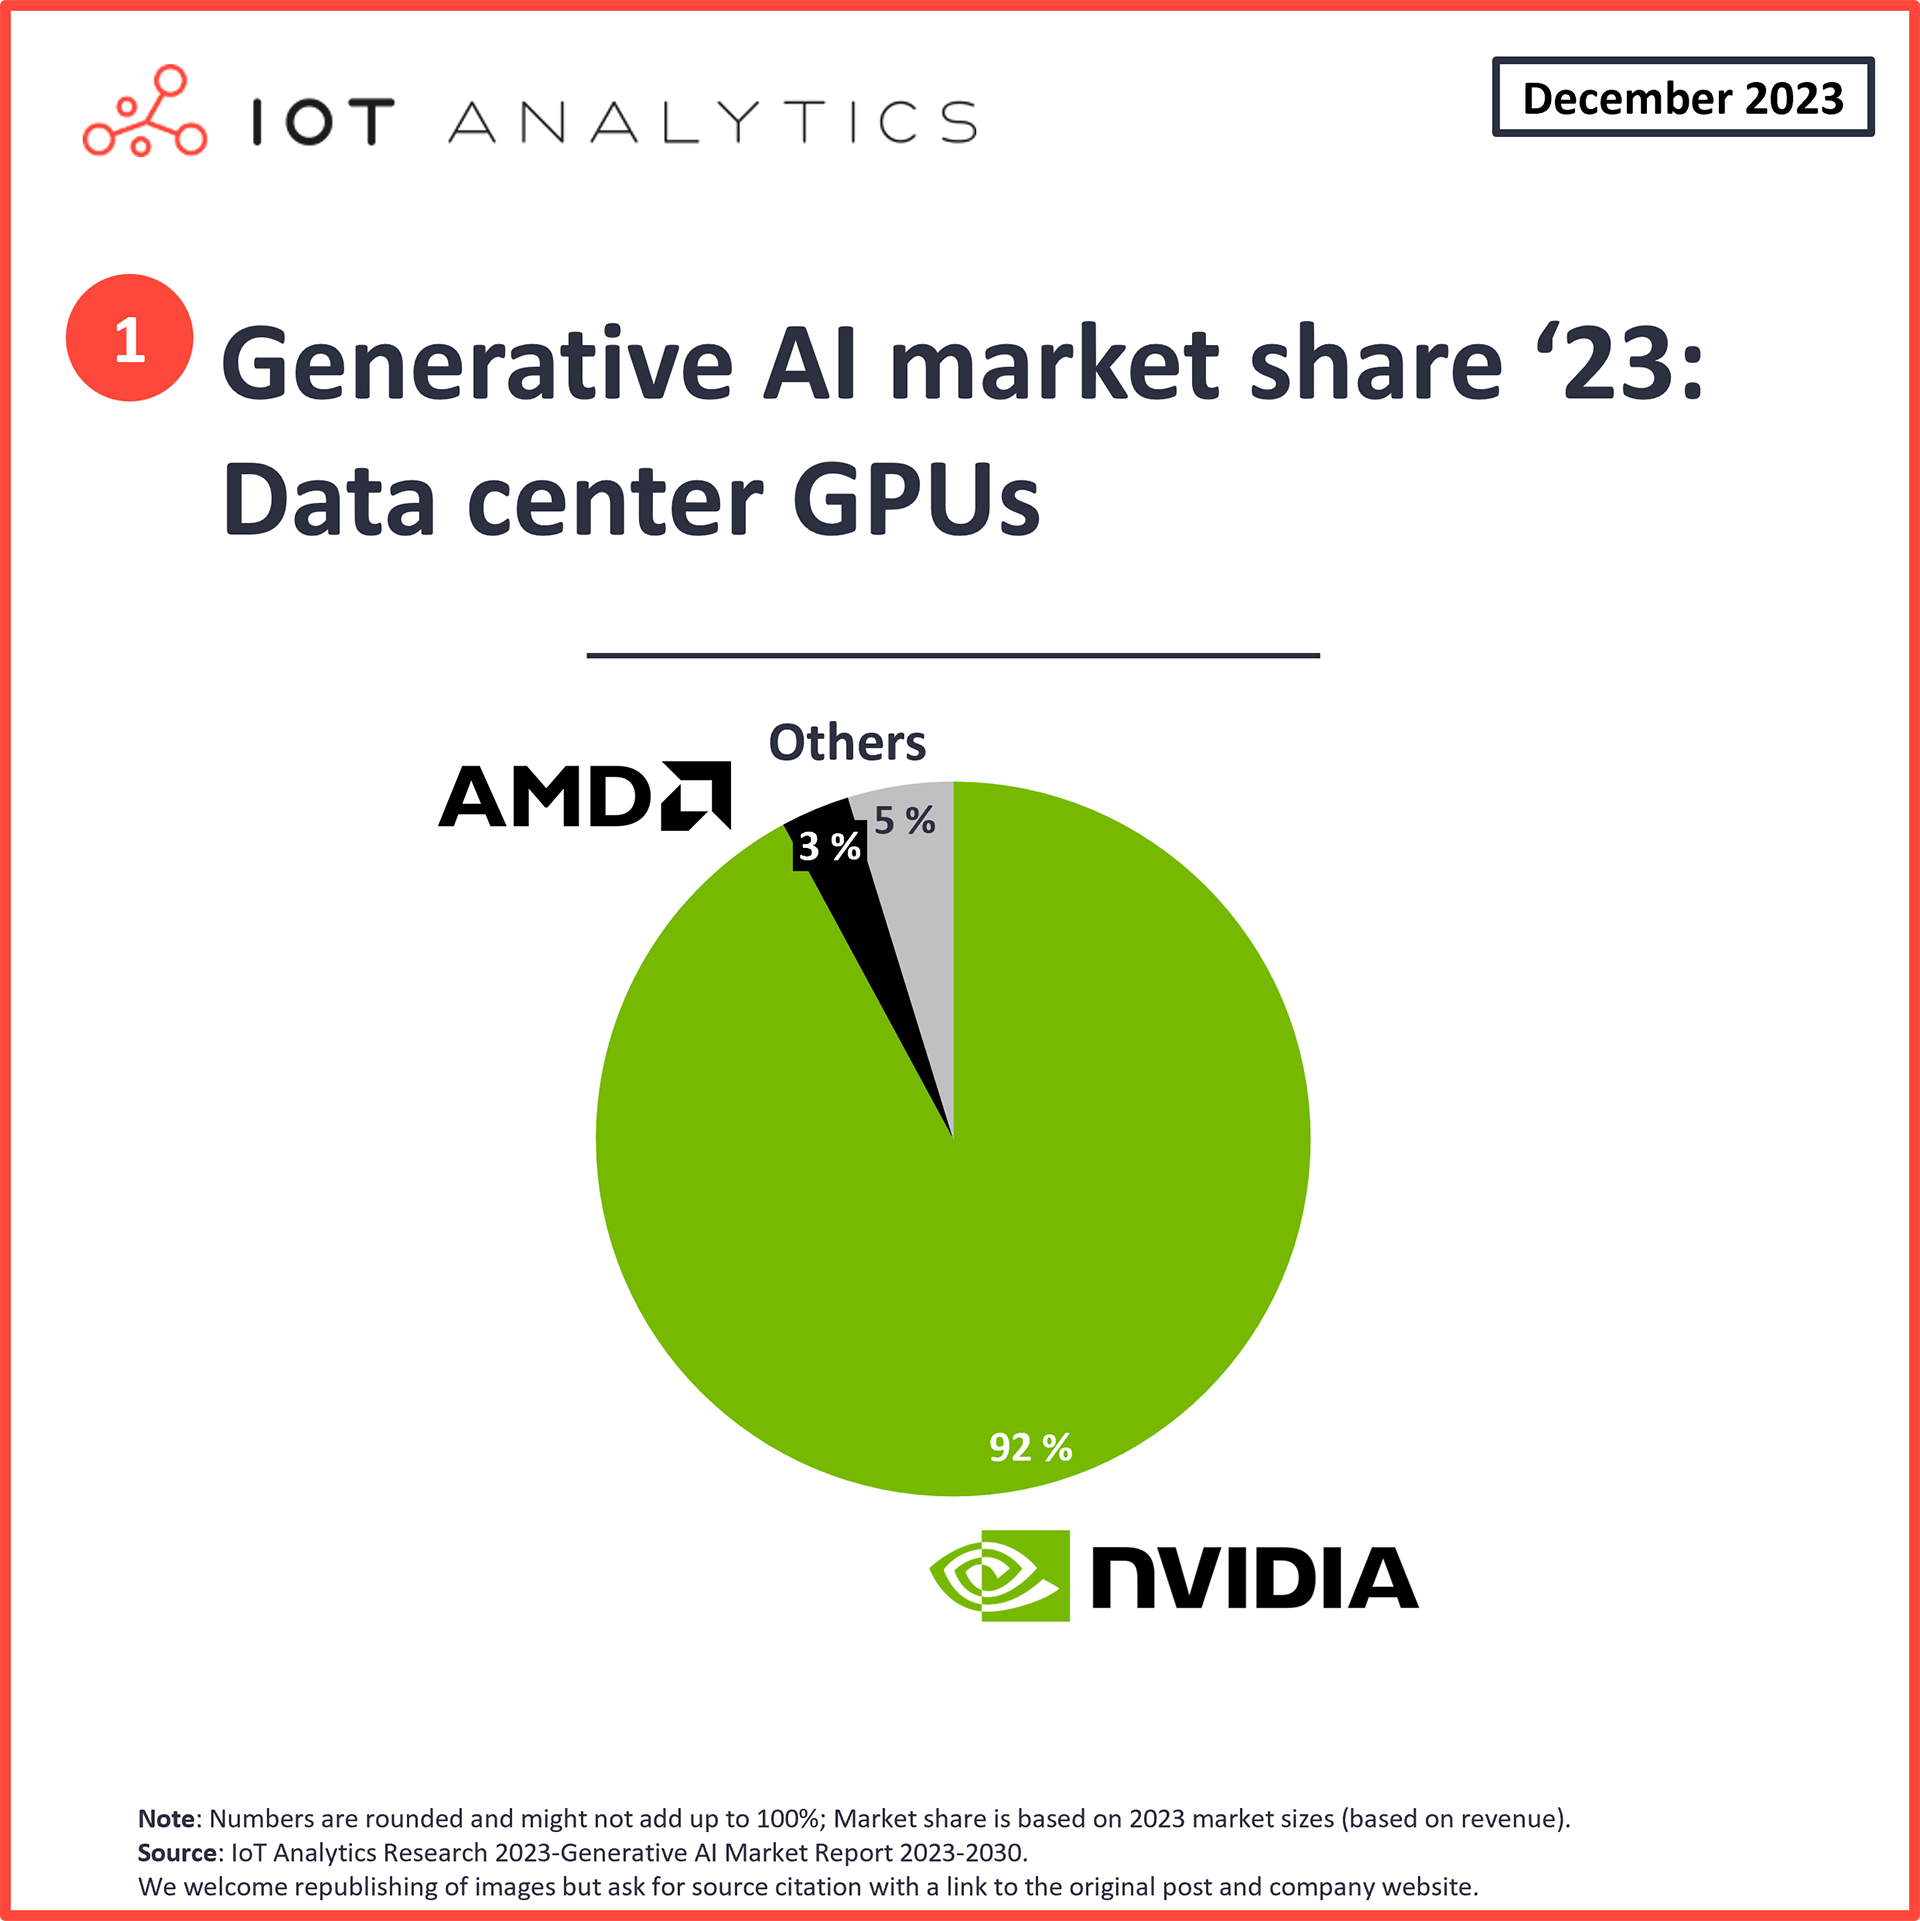 graphic: data center GPUs market share 2023